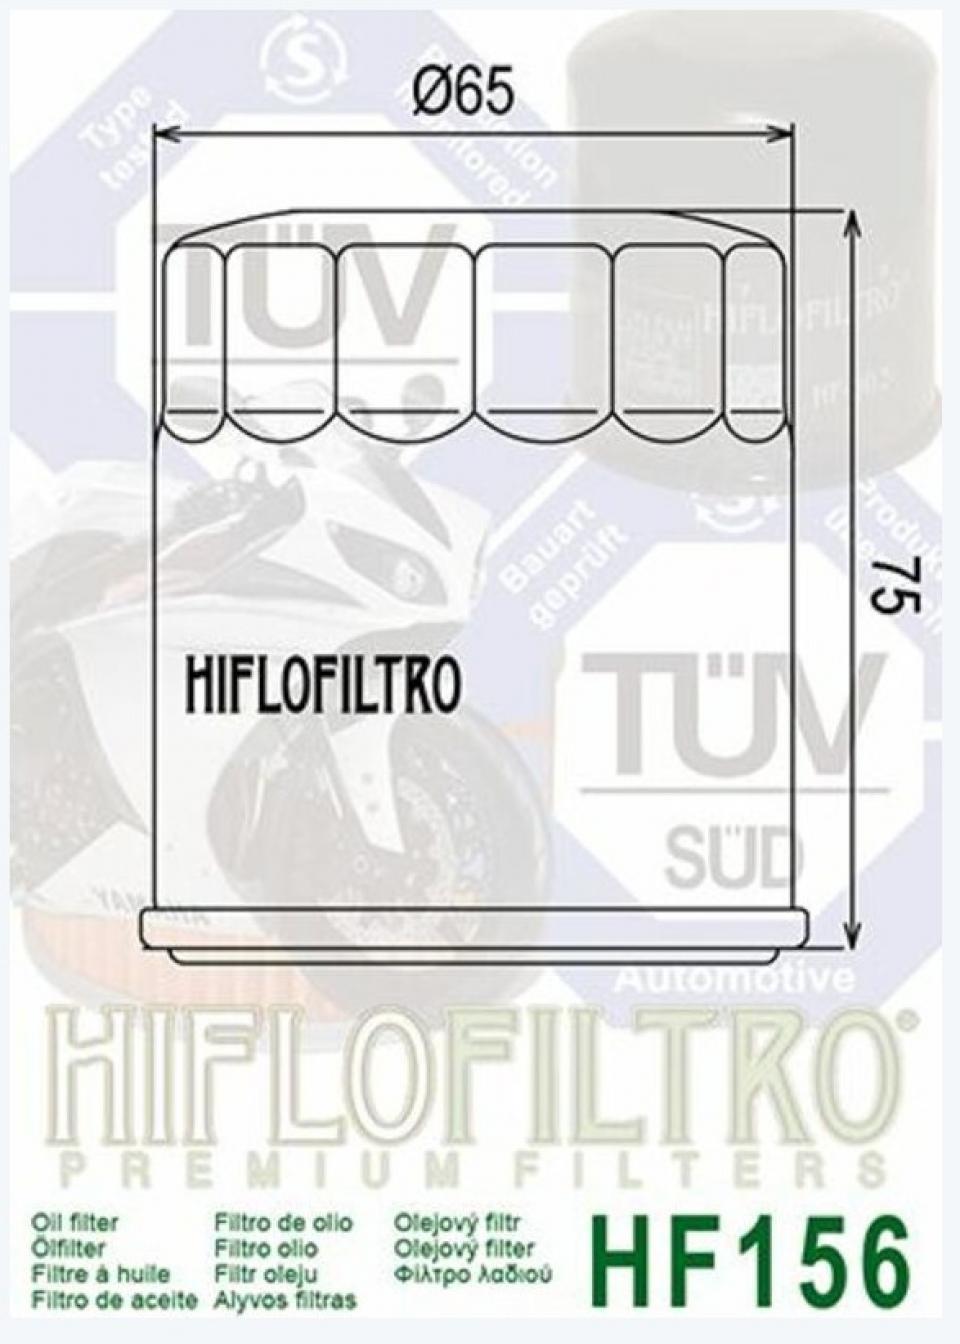 Filtre à huile Hiflo Filtro pour Moto KTM 660 SMC 2003-2006 Neuf